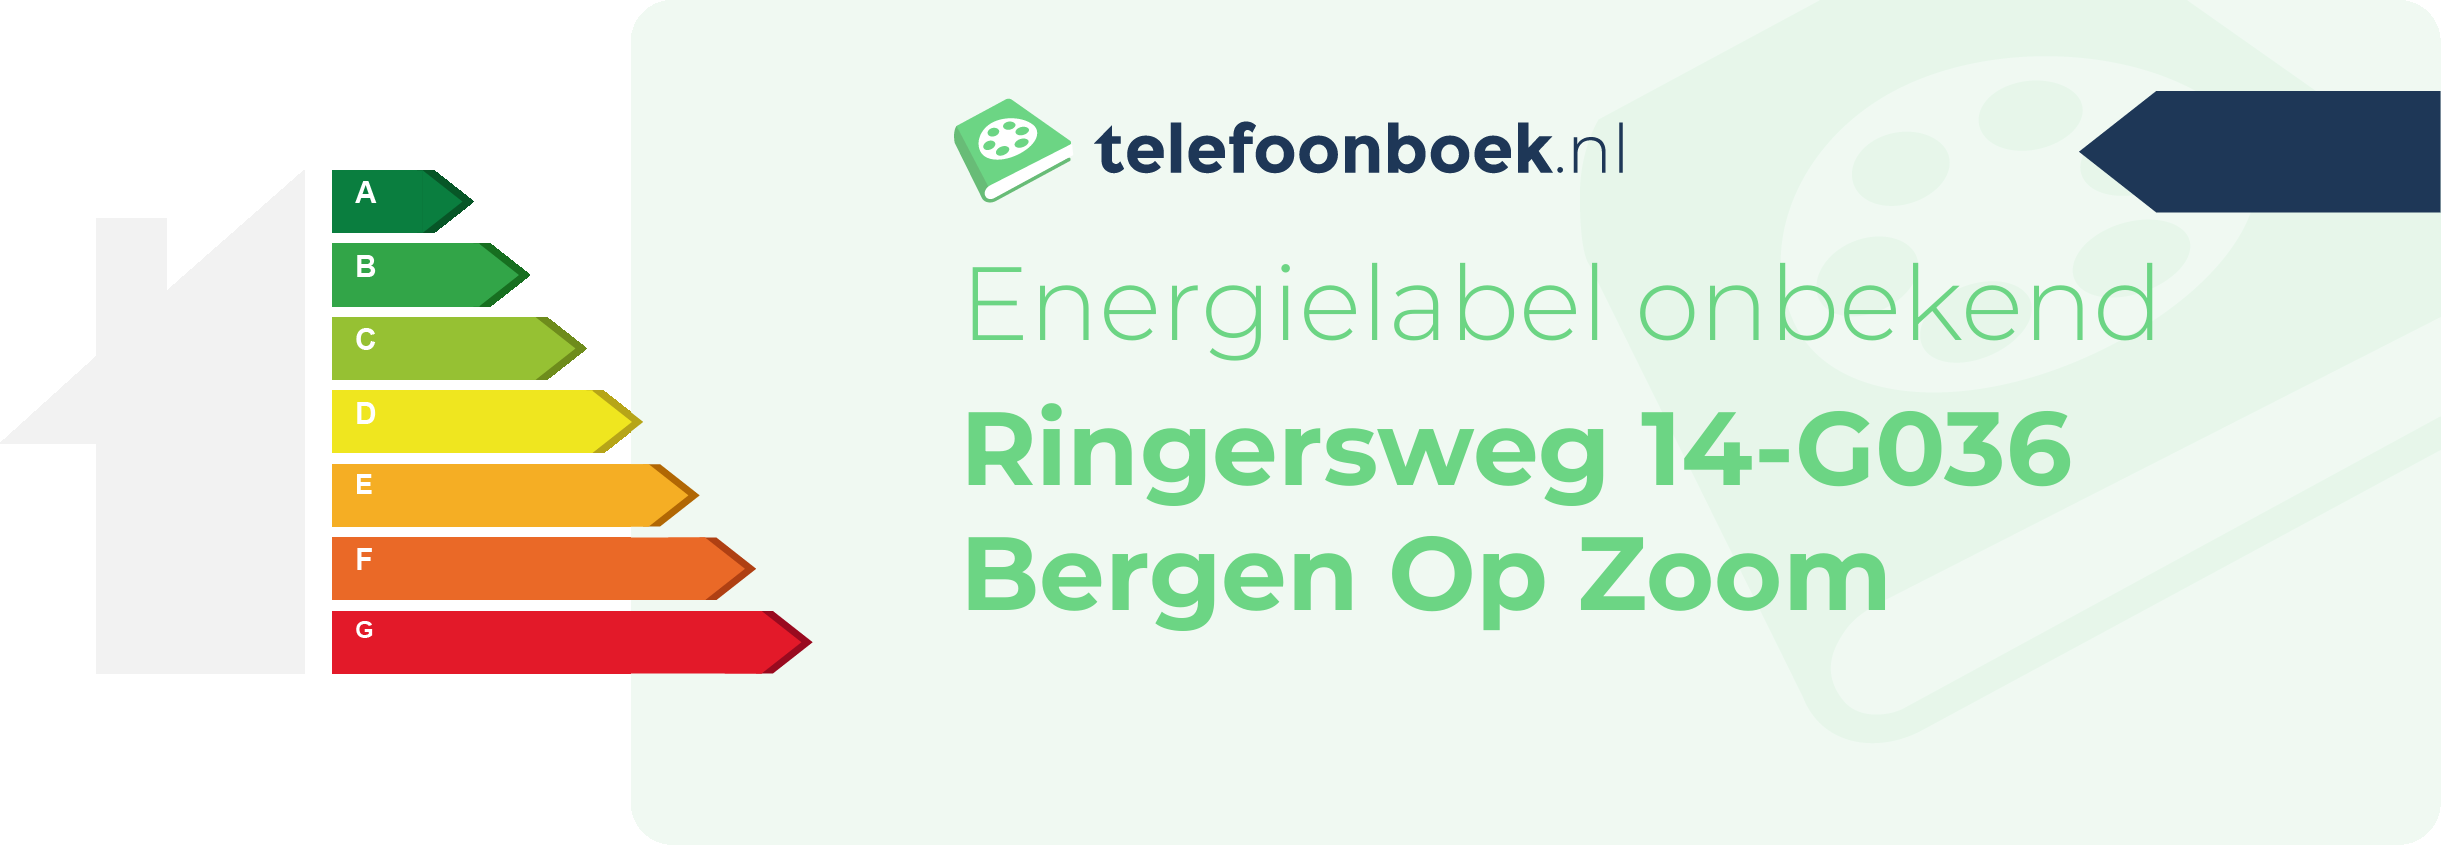 Energielabel Ringersweg 14-G036 Bergen Op Zoom